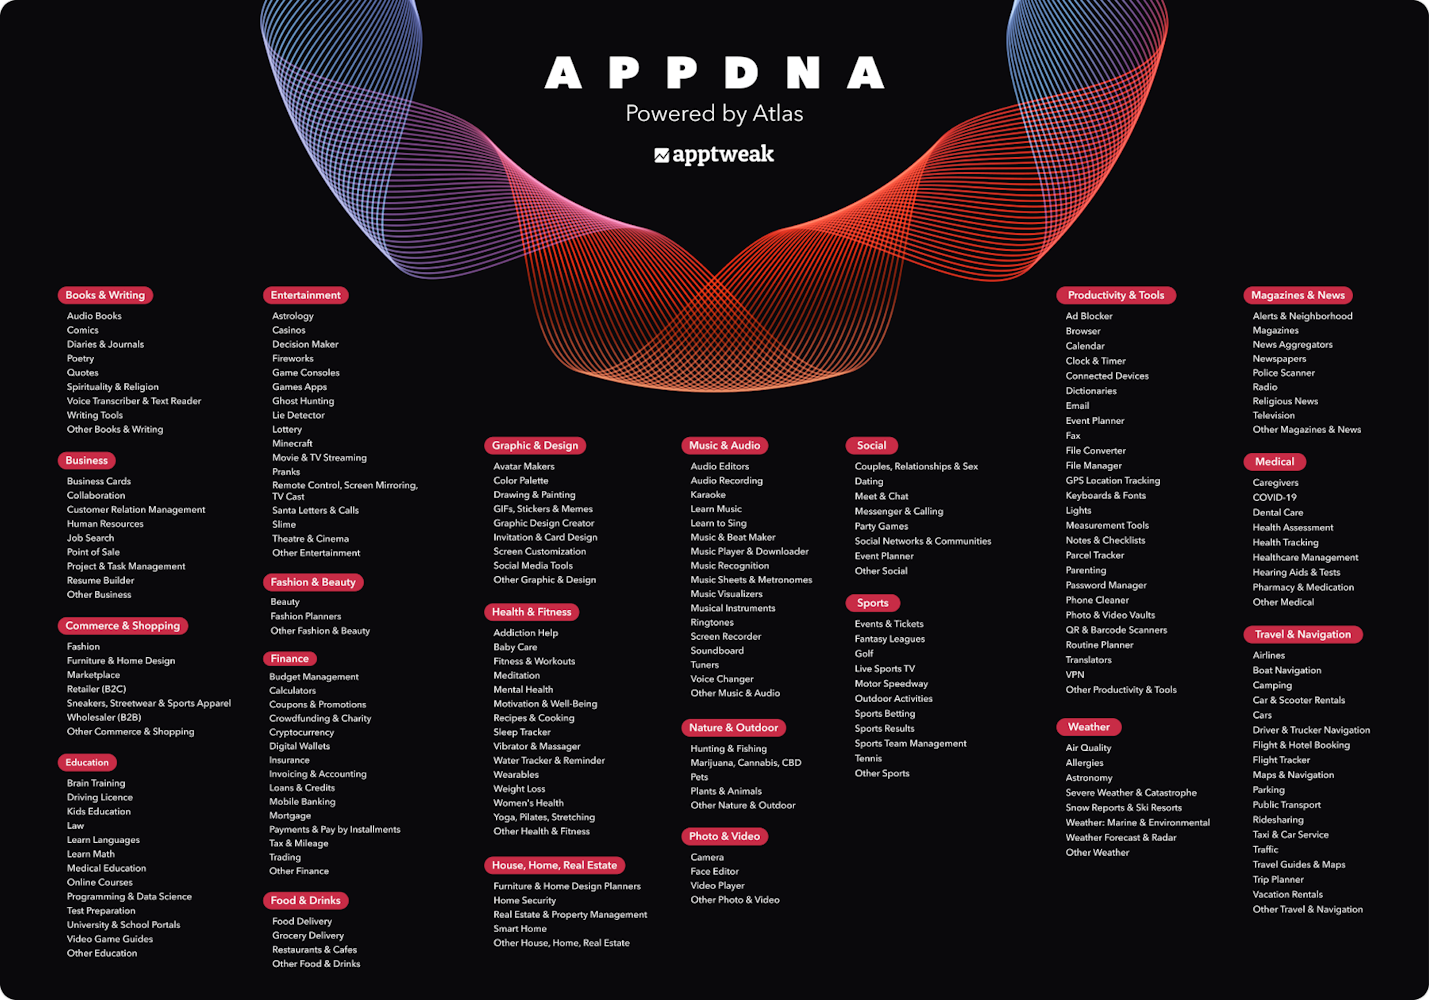 appdna-taxonomy-AppTweak